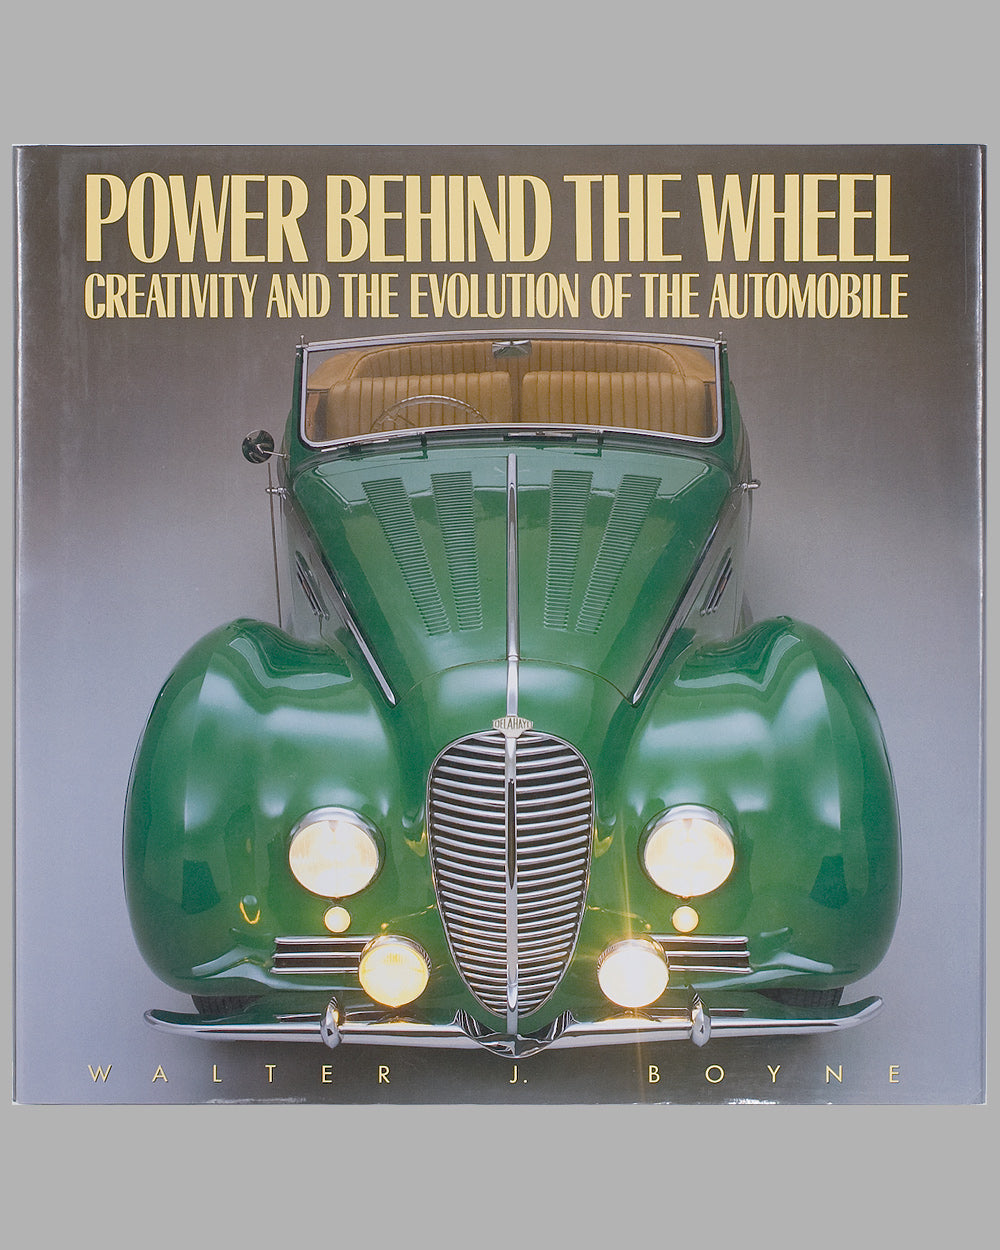 Power Behind the Wheel book by W. J. Boyne, 1991 ed.